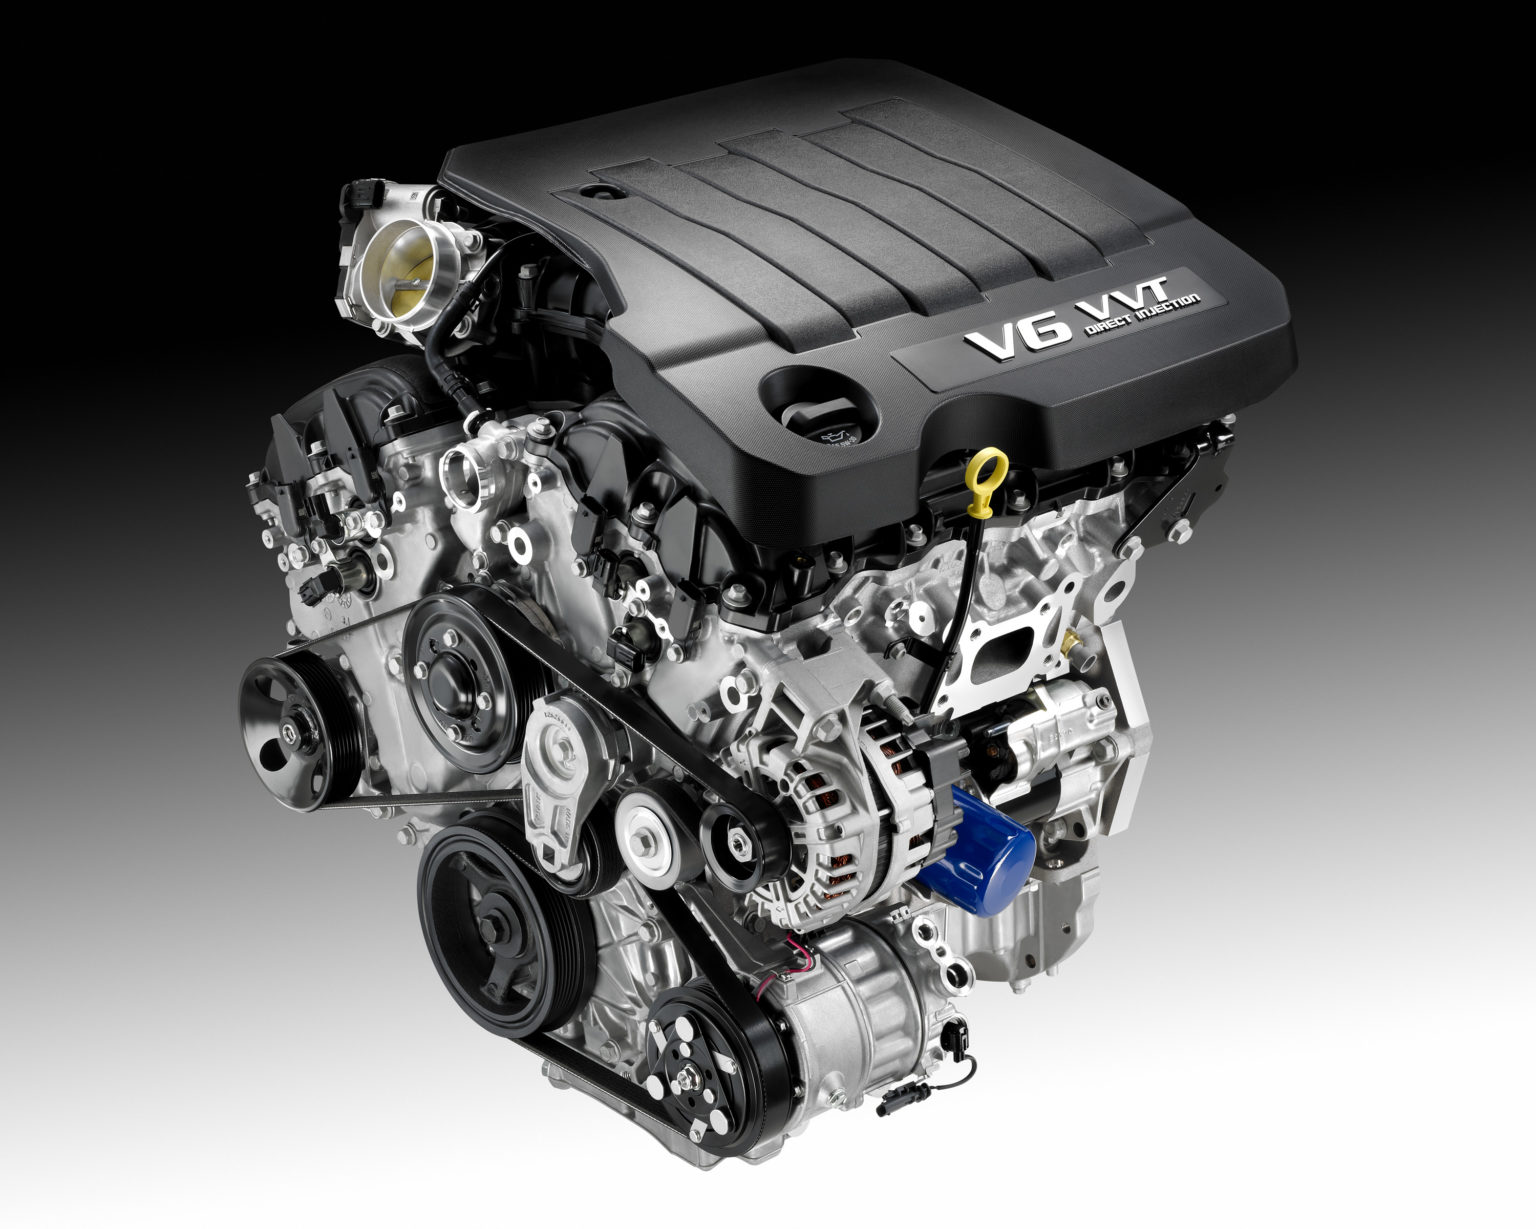 New 2022 GMC Terrain Engine 2.0 L 4cylinder GMC Specs News